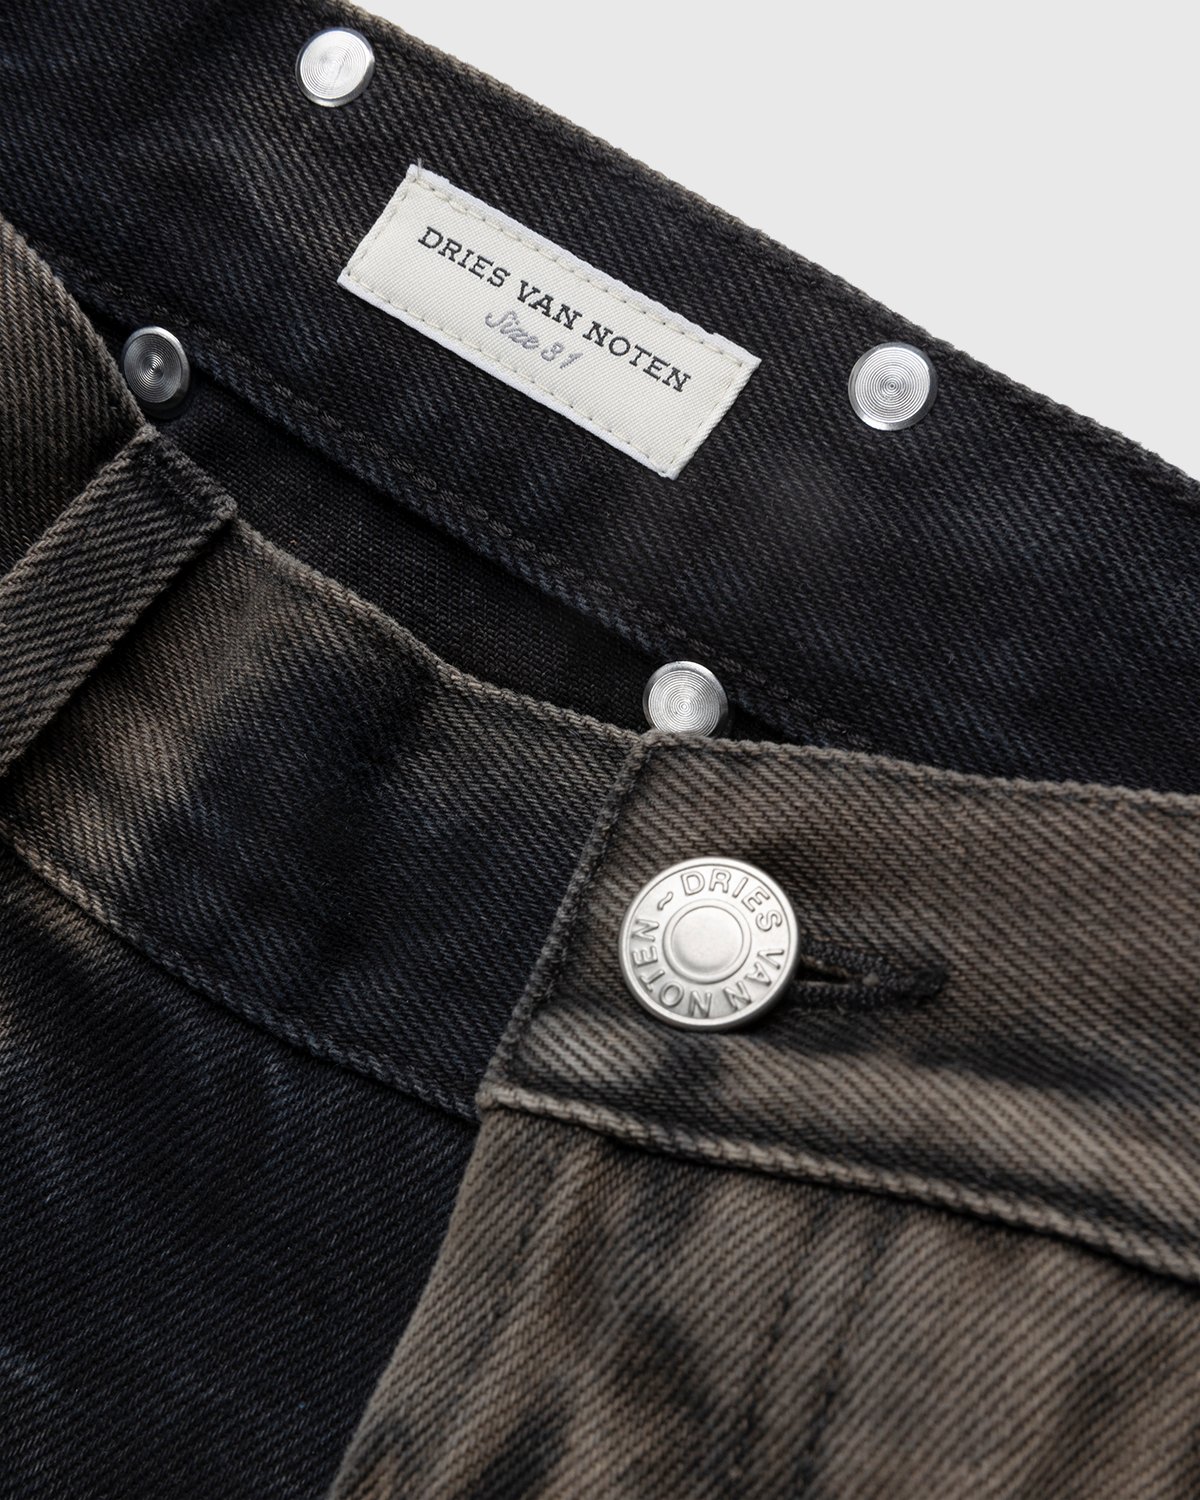 Dries van Noten - Pine Acid Wash Jeans Black - Clothing - Black - Image 4